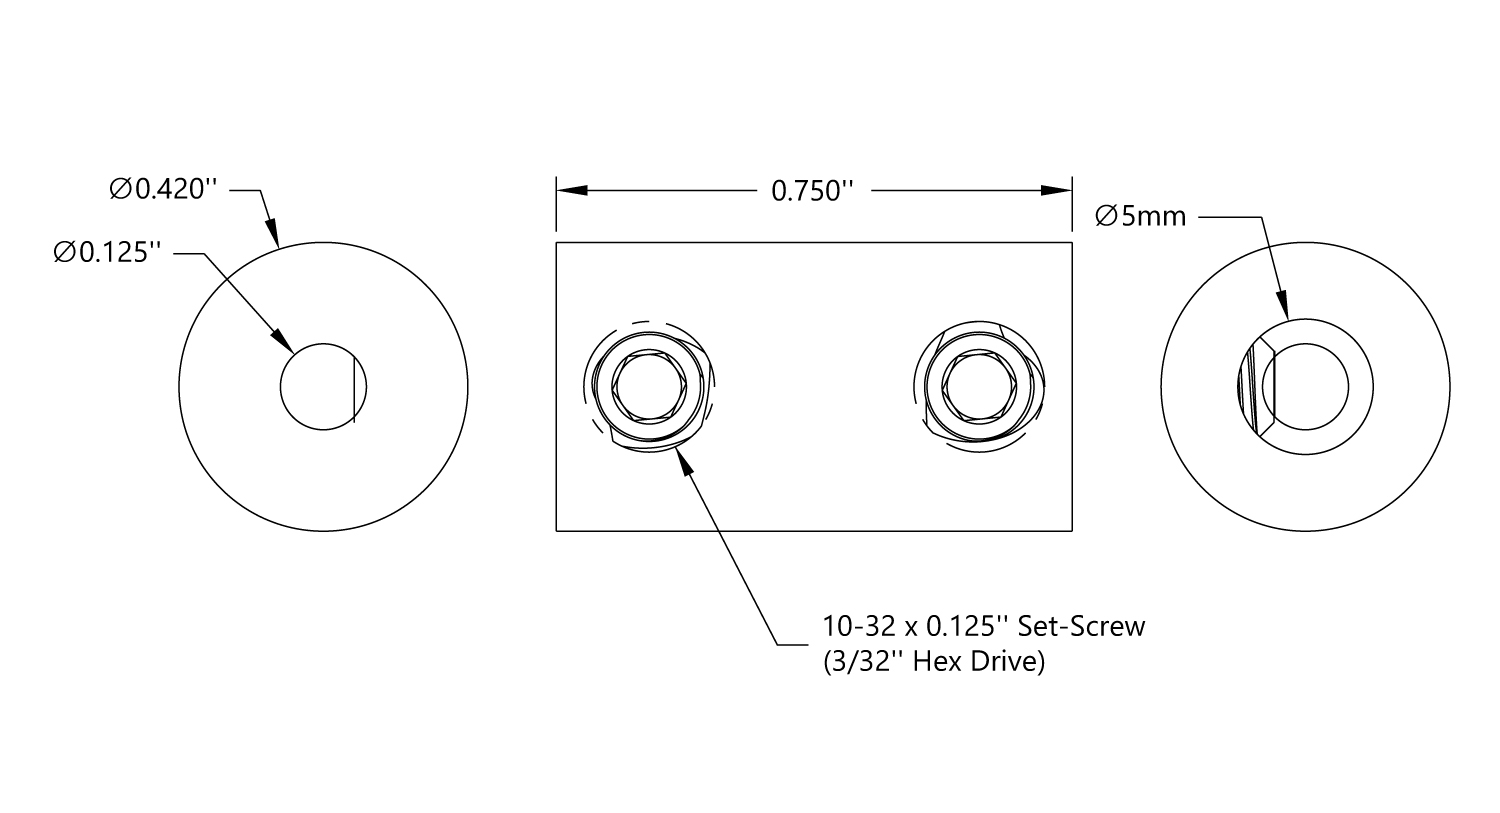  Actobotics Set Screw Shaft Coupler (1/8-Inch to 5mm) - Click to Enlarge